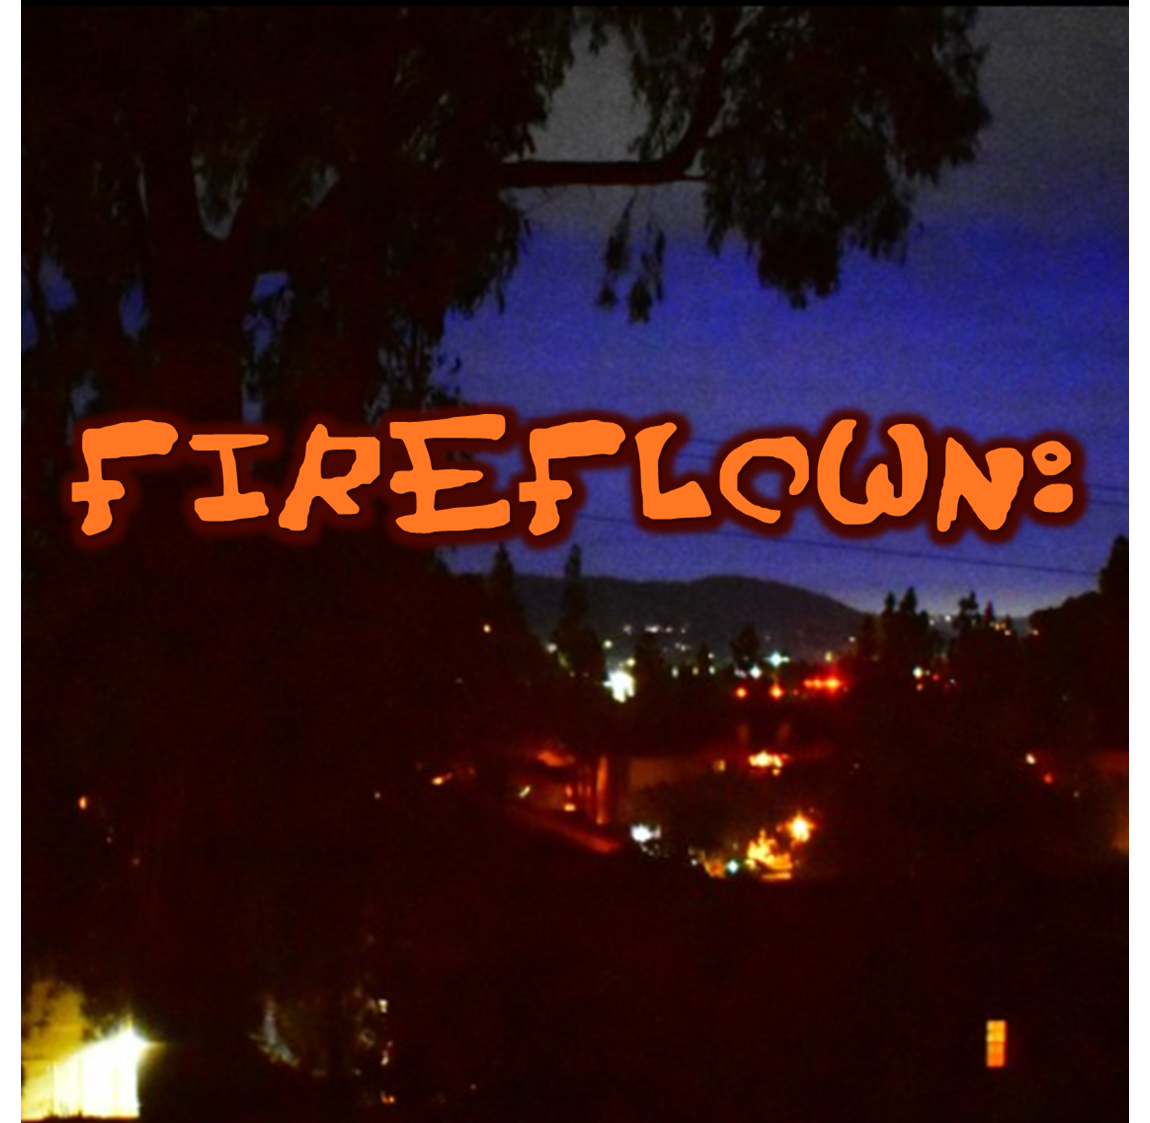 Fireflown.